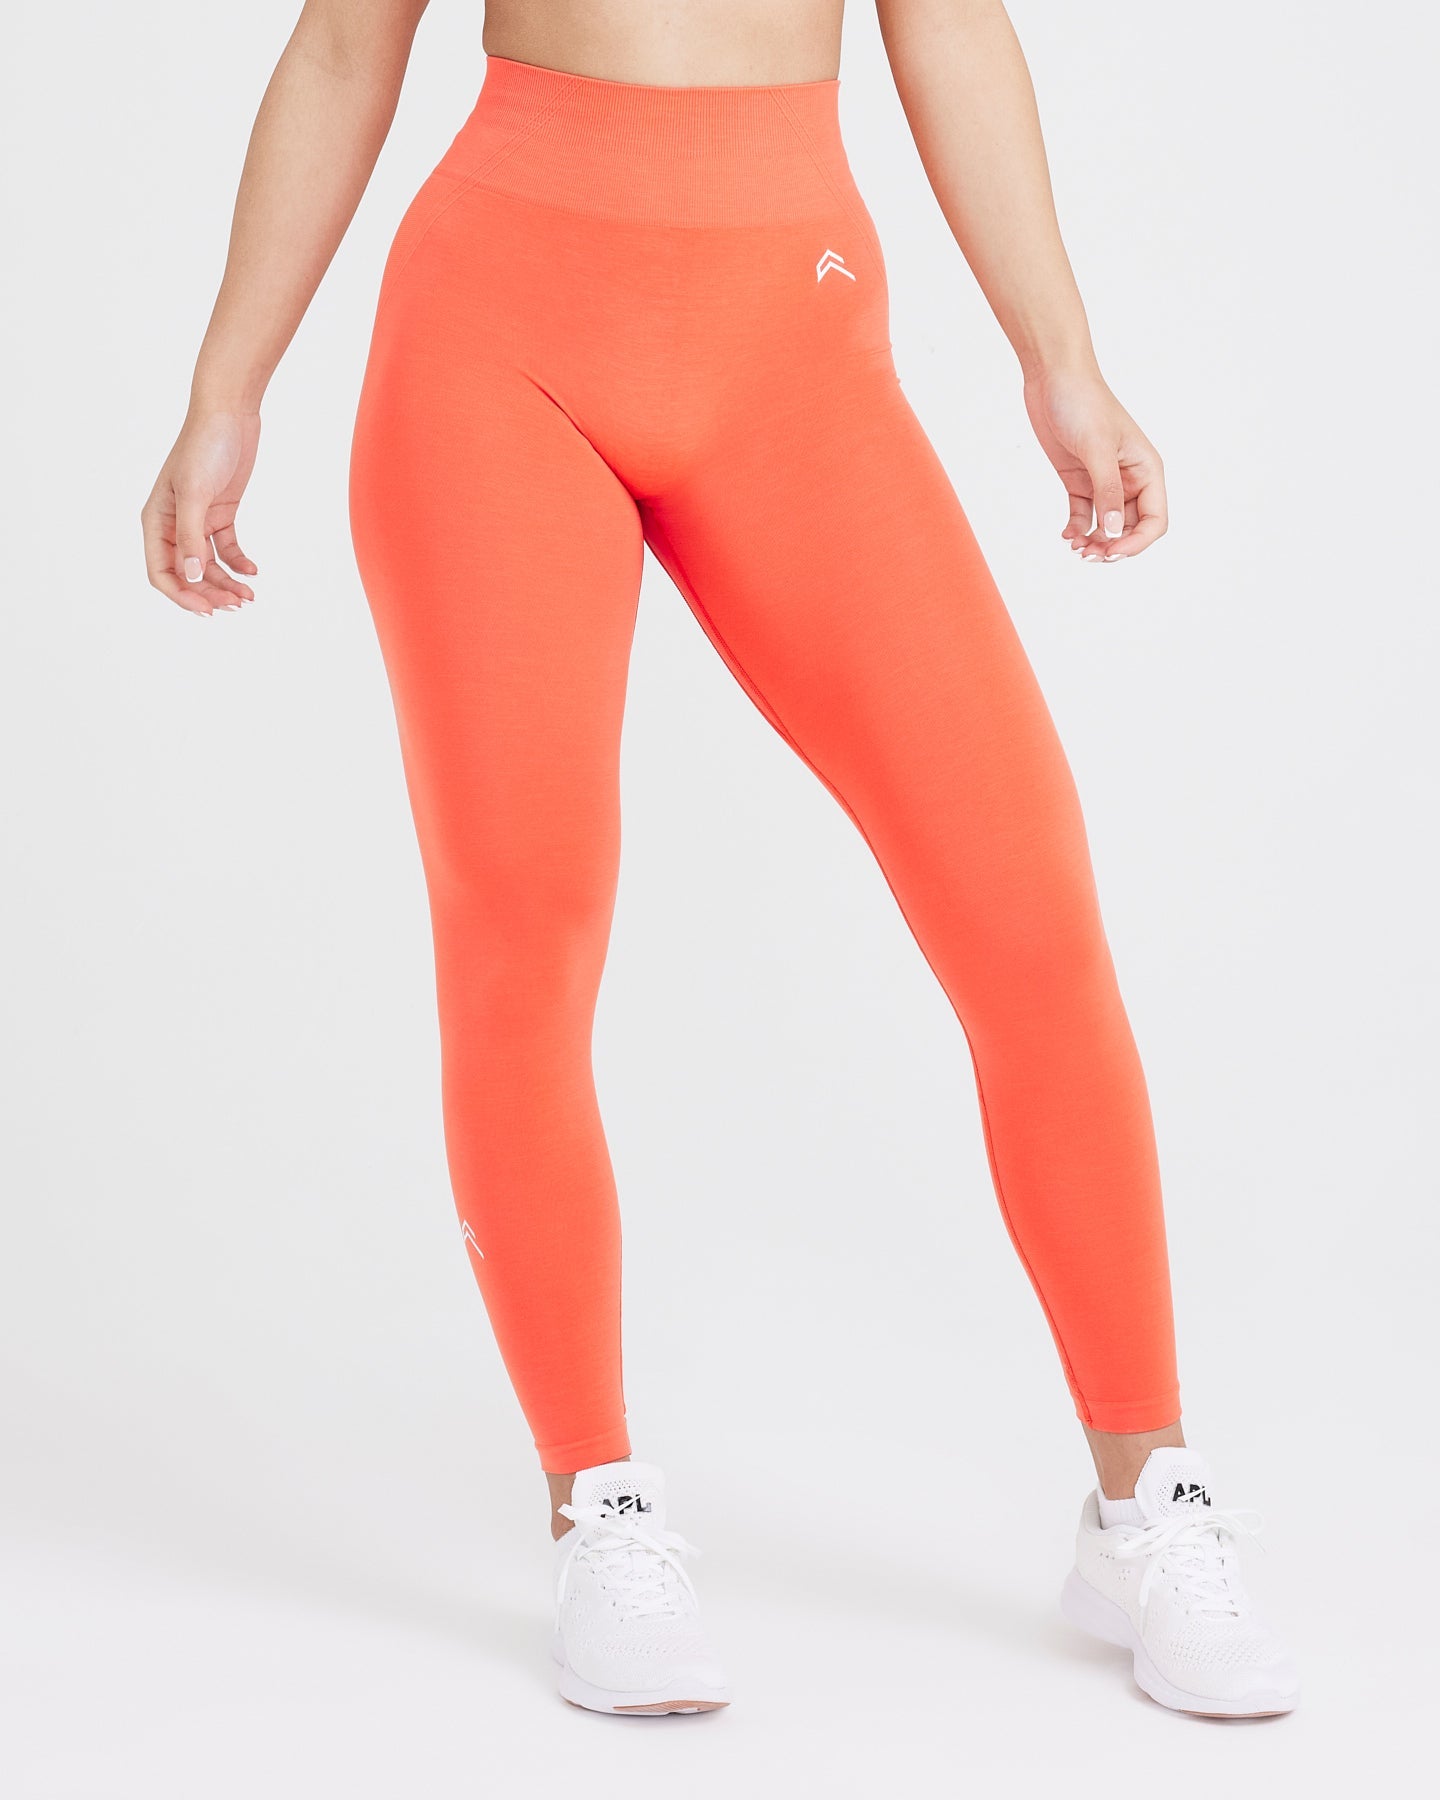 NEW SHAPING CUT Peach Leggings Light Pastel Pink Orange Yellow Women Tights  Plus Size Activewear Fitness Gym Workout Apparel Sportswear -  Australia